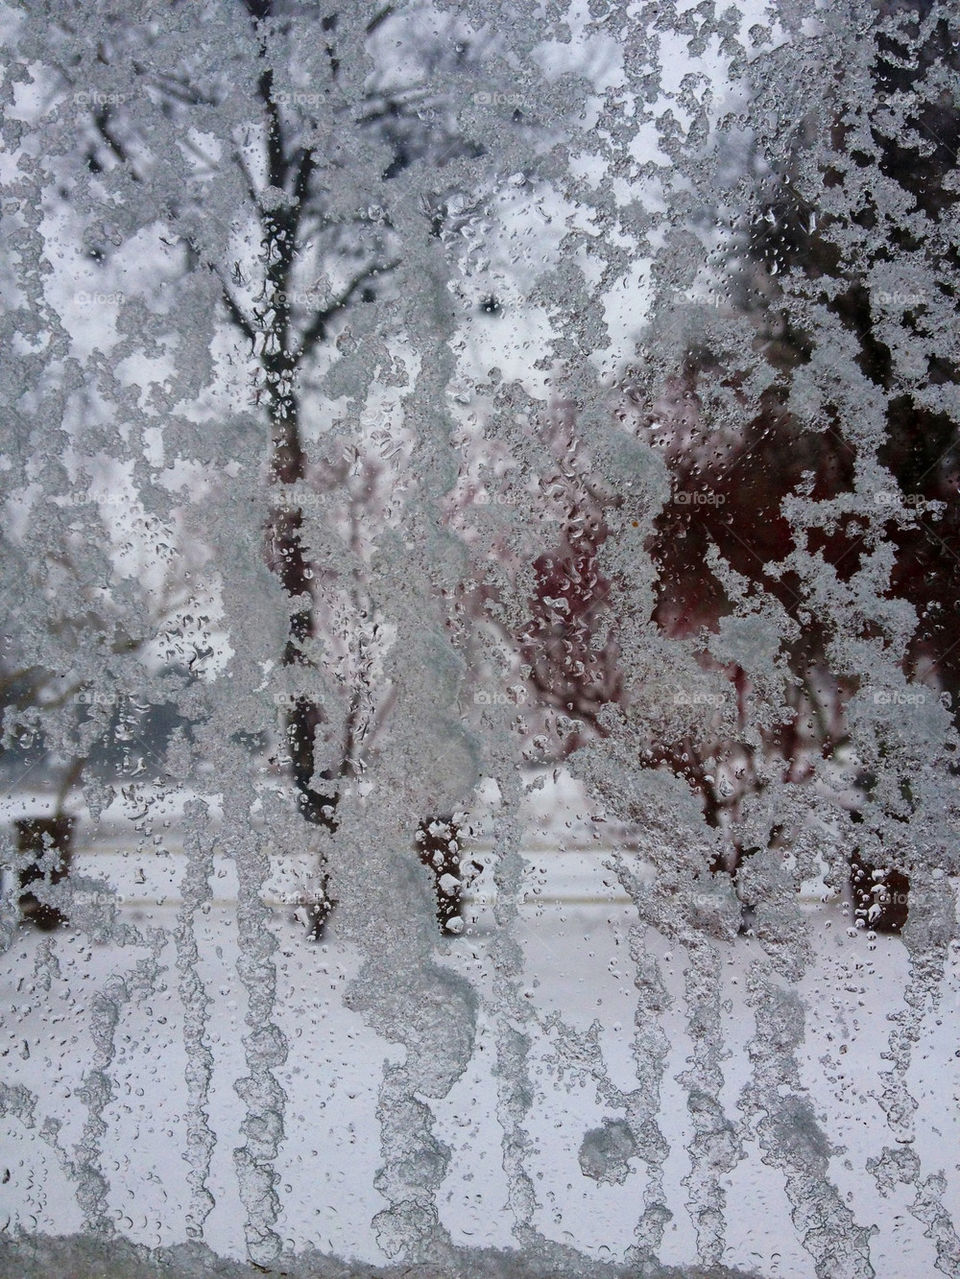 Window snow